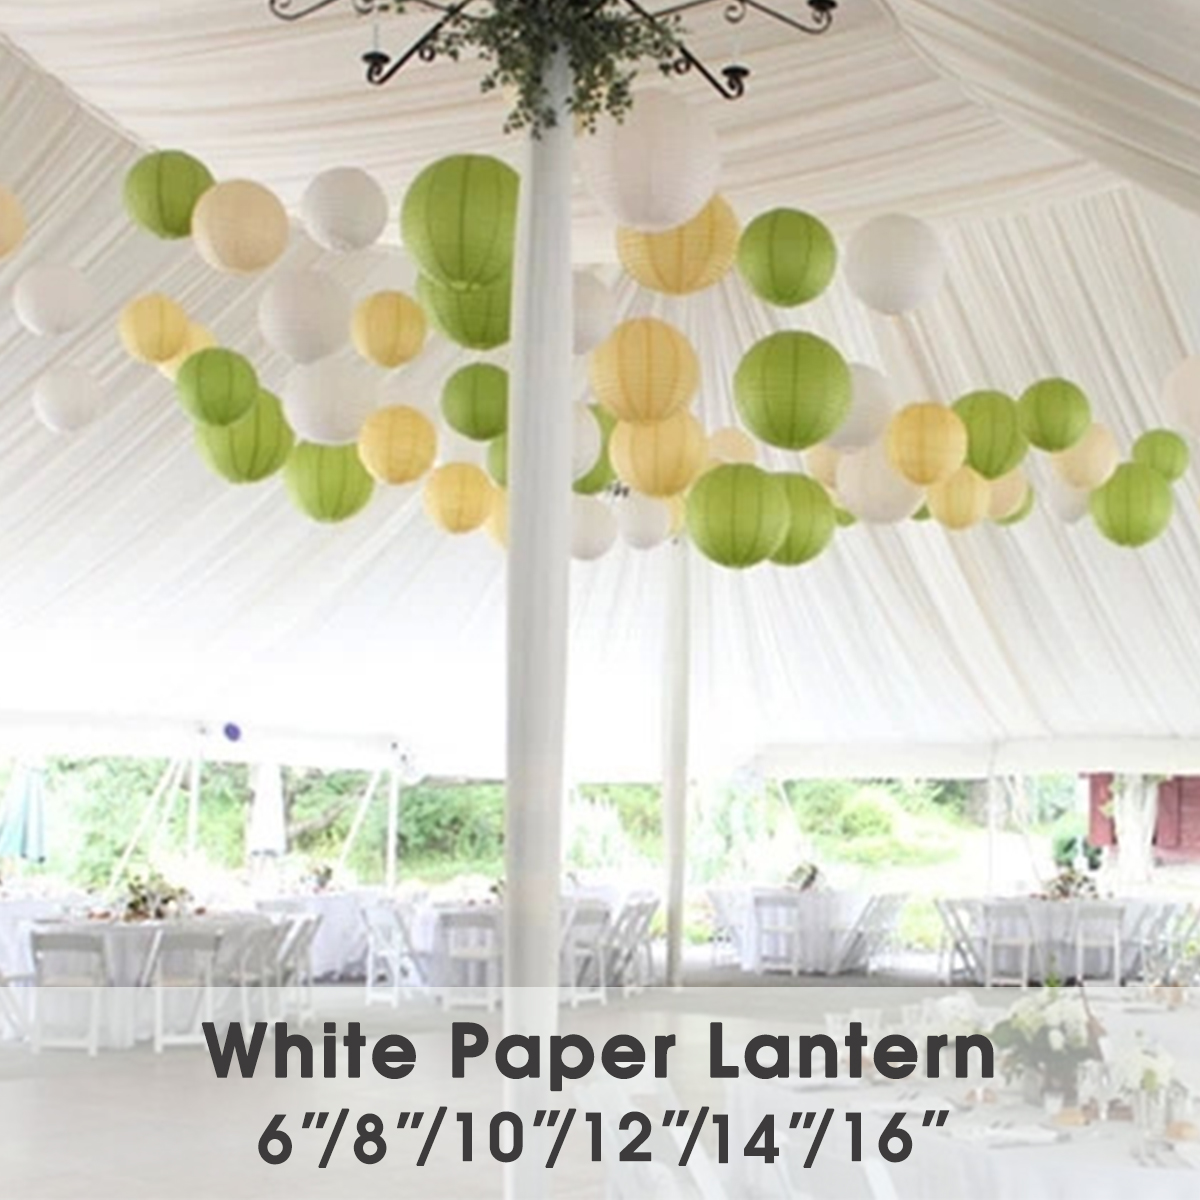 3PCS-White-Round-Paper-Lanterns-Chinese-Hanging-Decorations-Decorative-Lanterns-for-Wedding-Party-De-1634891-2